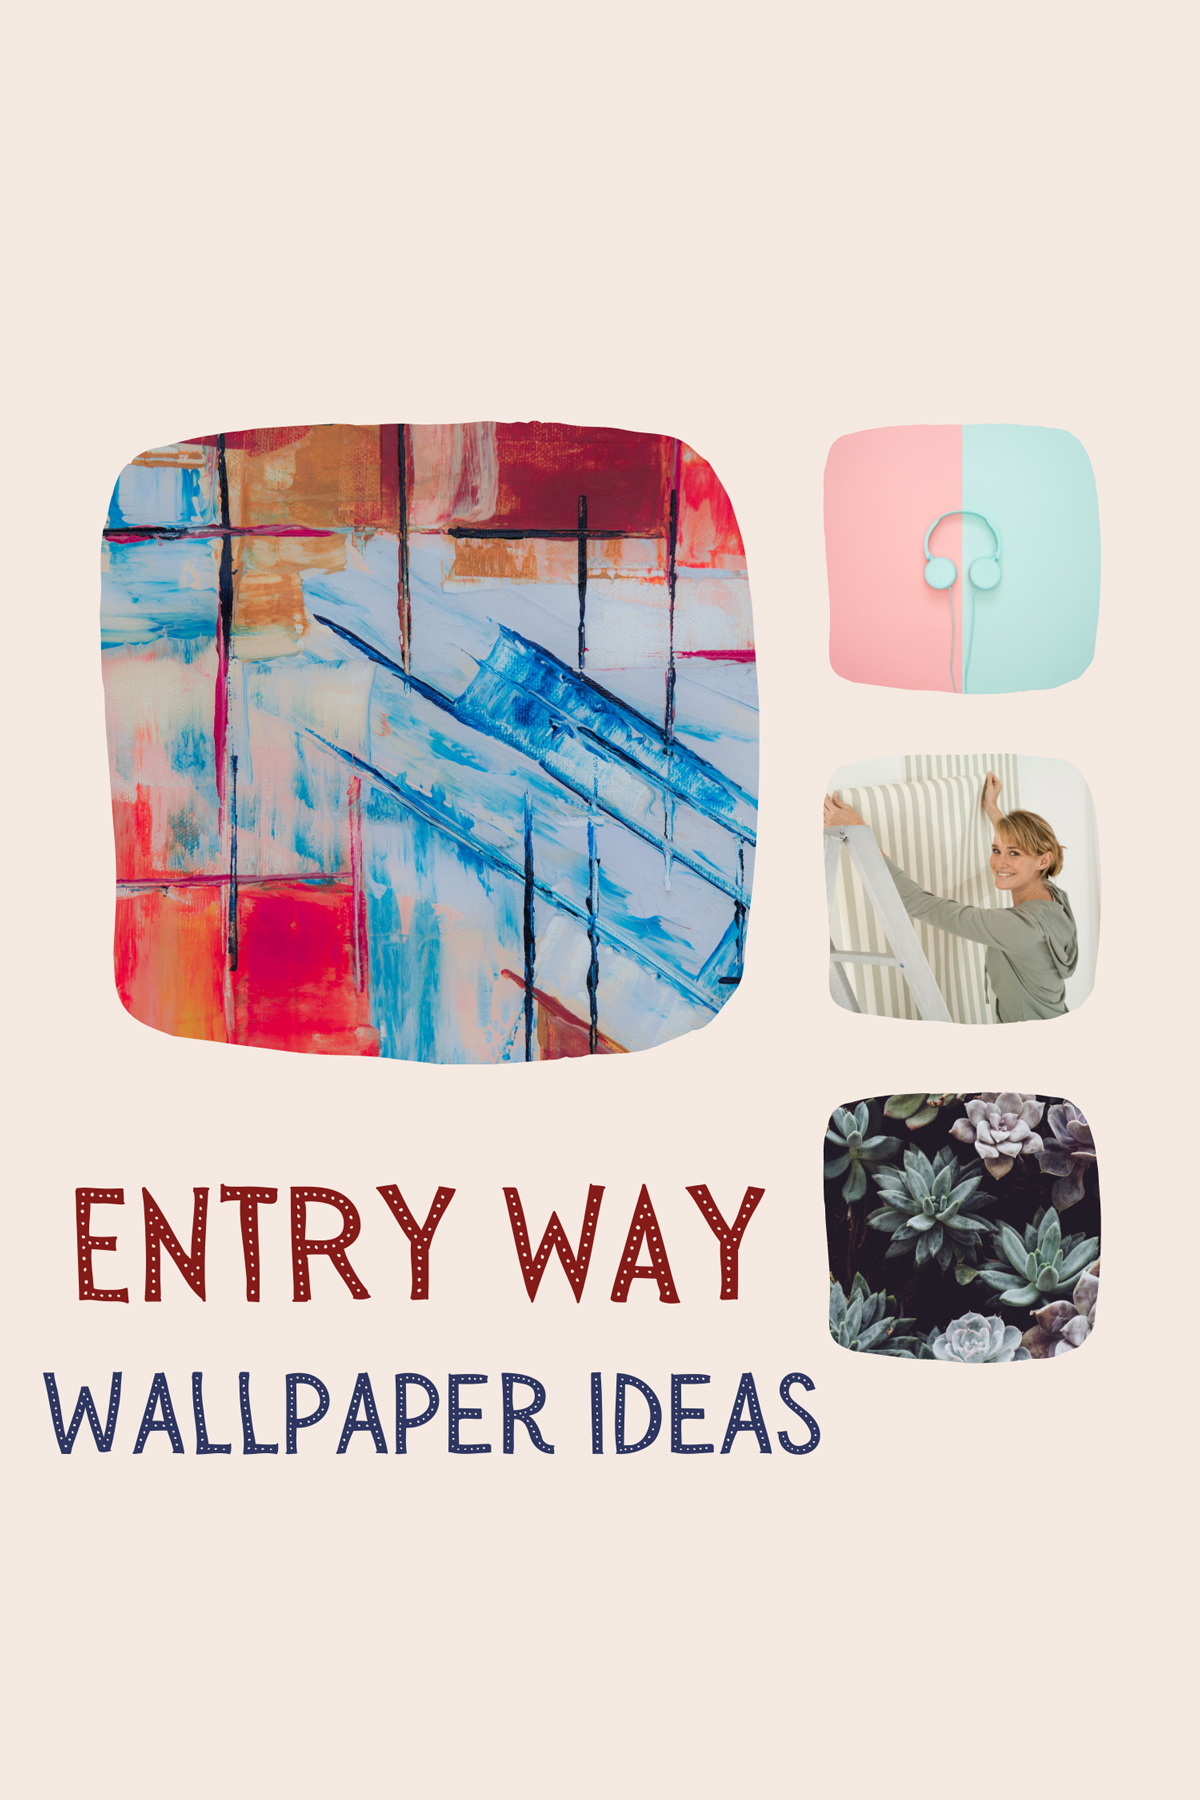 Entry wallpaper ideas